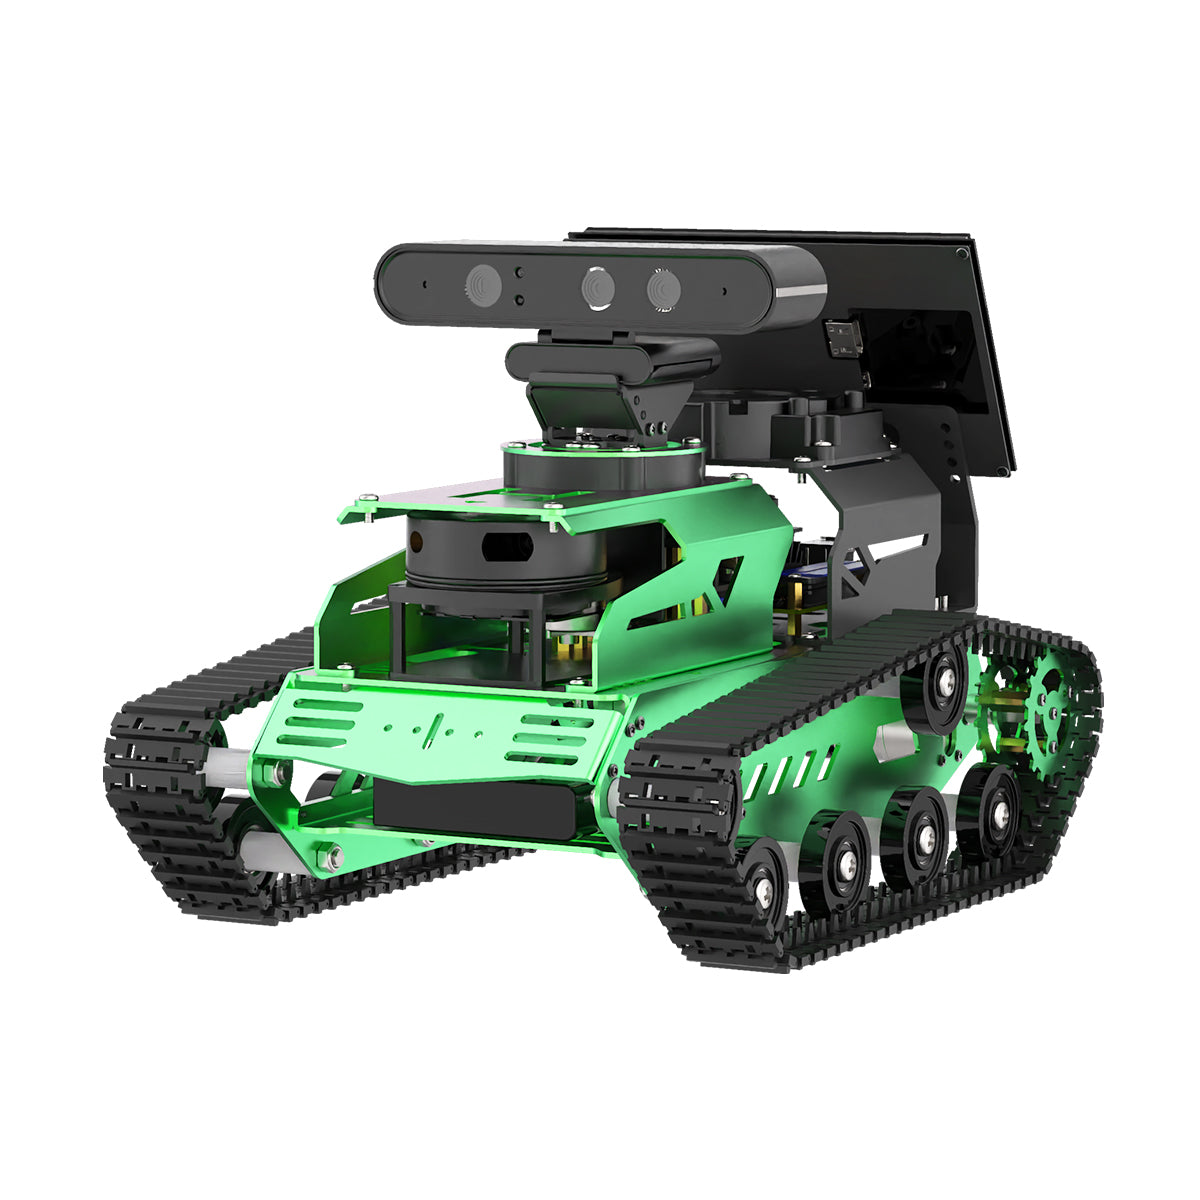 Hiwonder JetTank ROS Robot Tank Powered by Jetson Nano with Lidar Dept